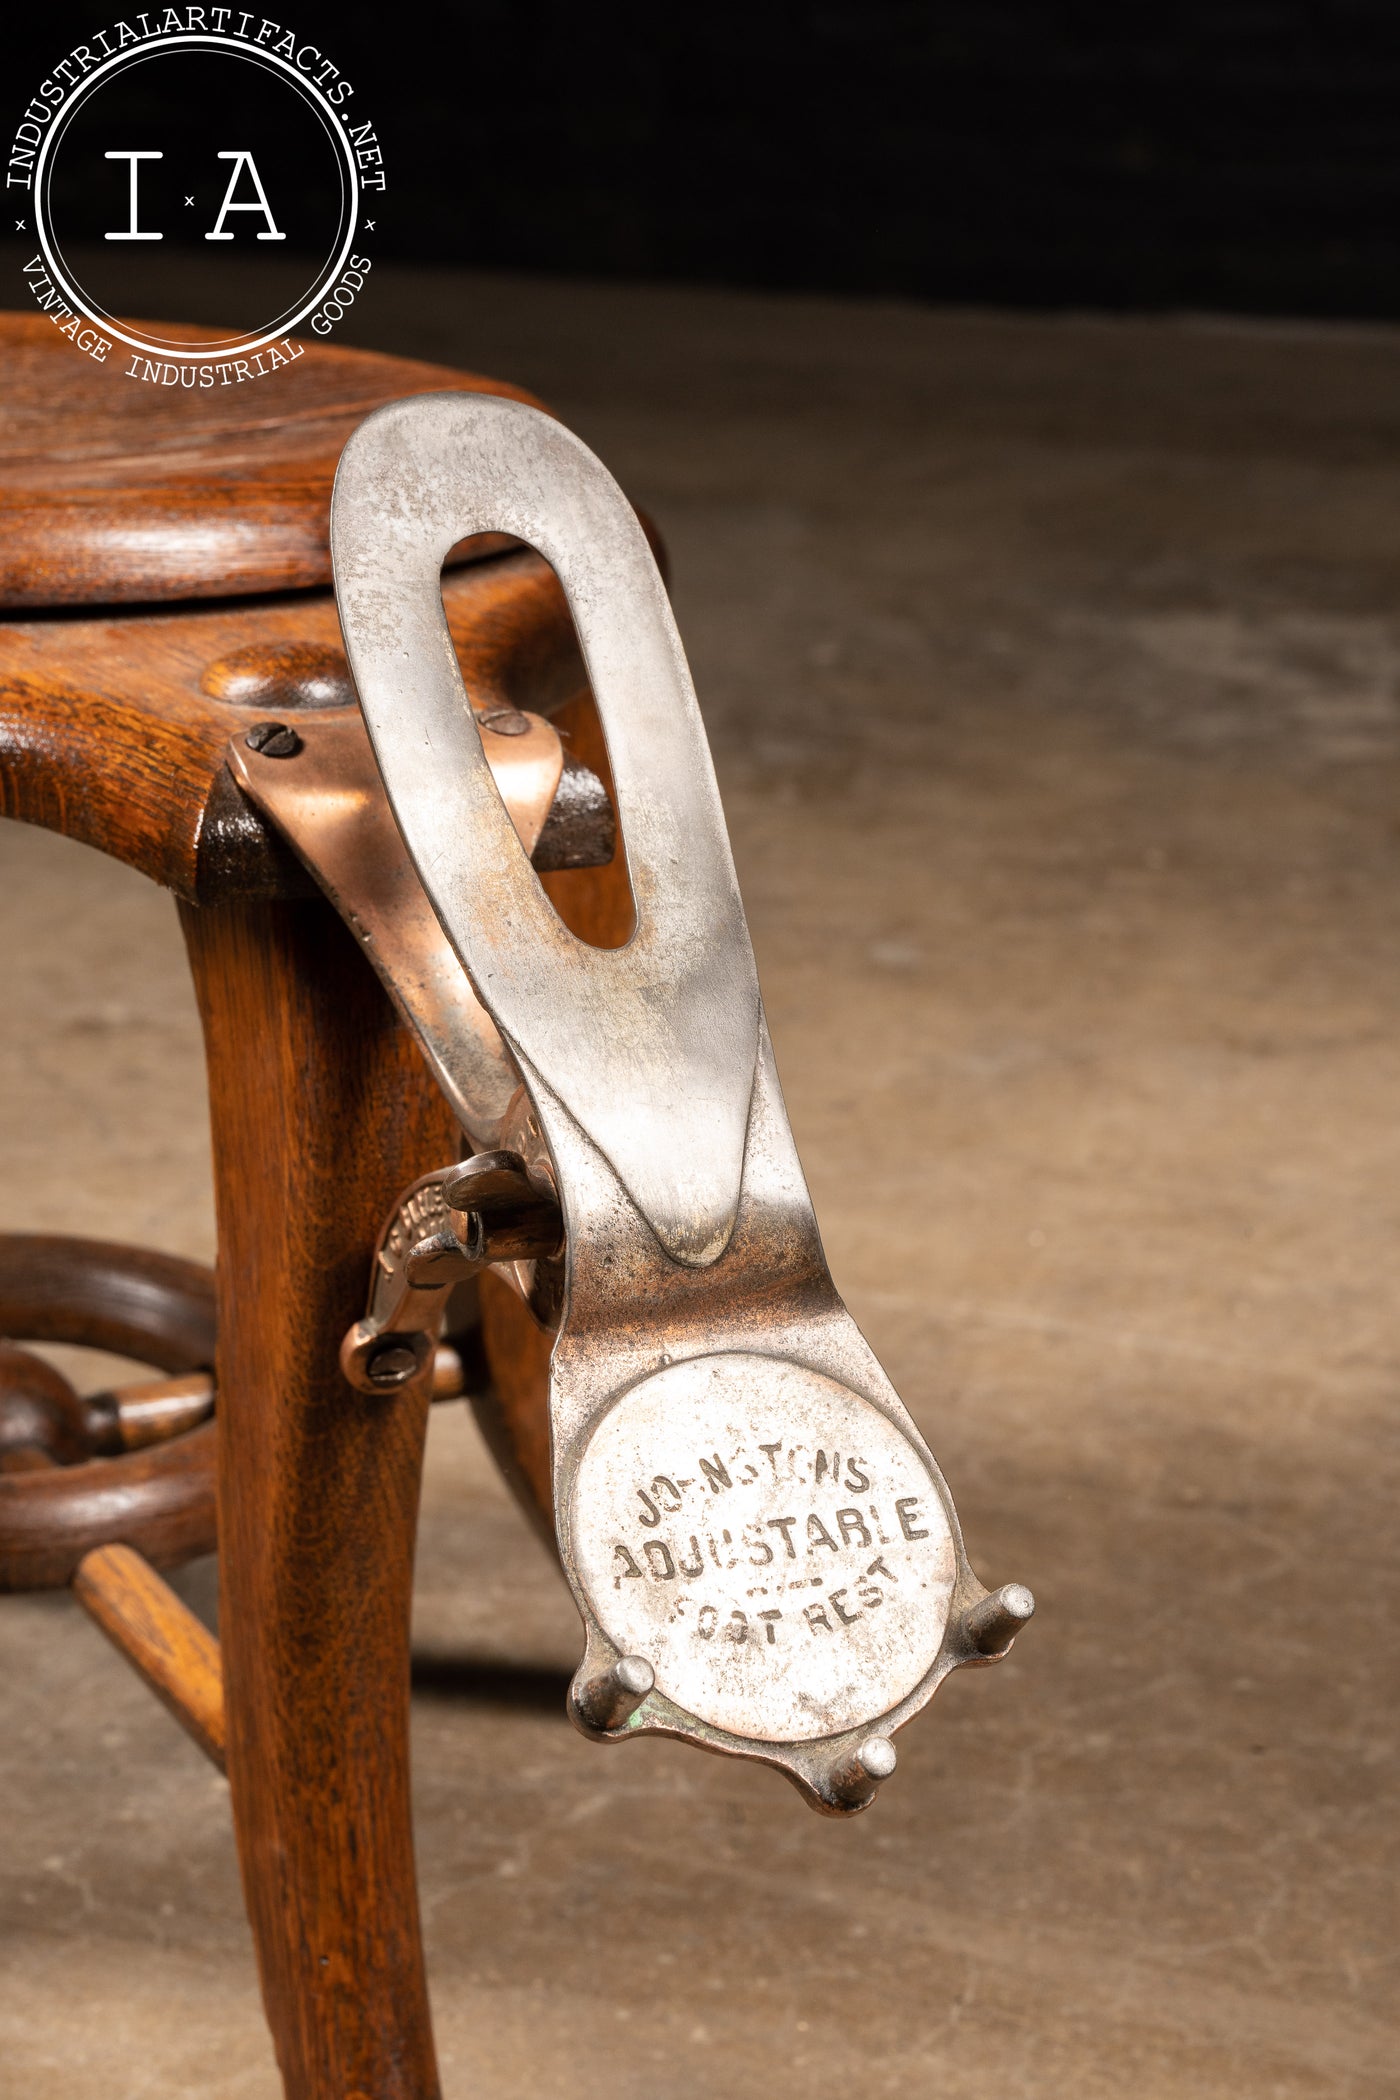 c. 1900 Wood and Metal Shoe Shine Stool by AC Barler